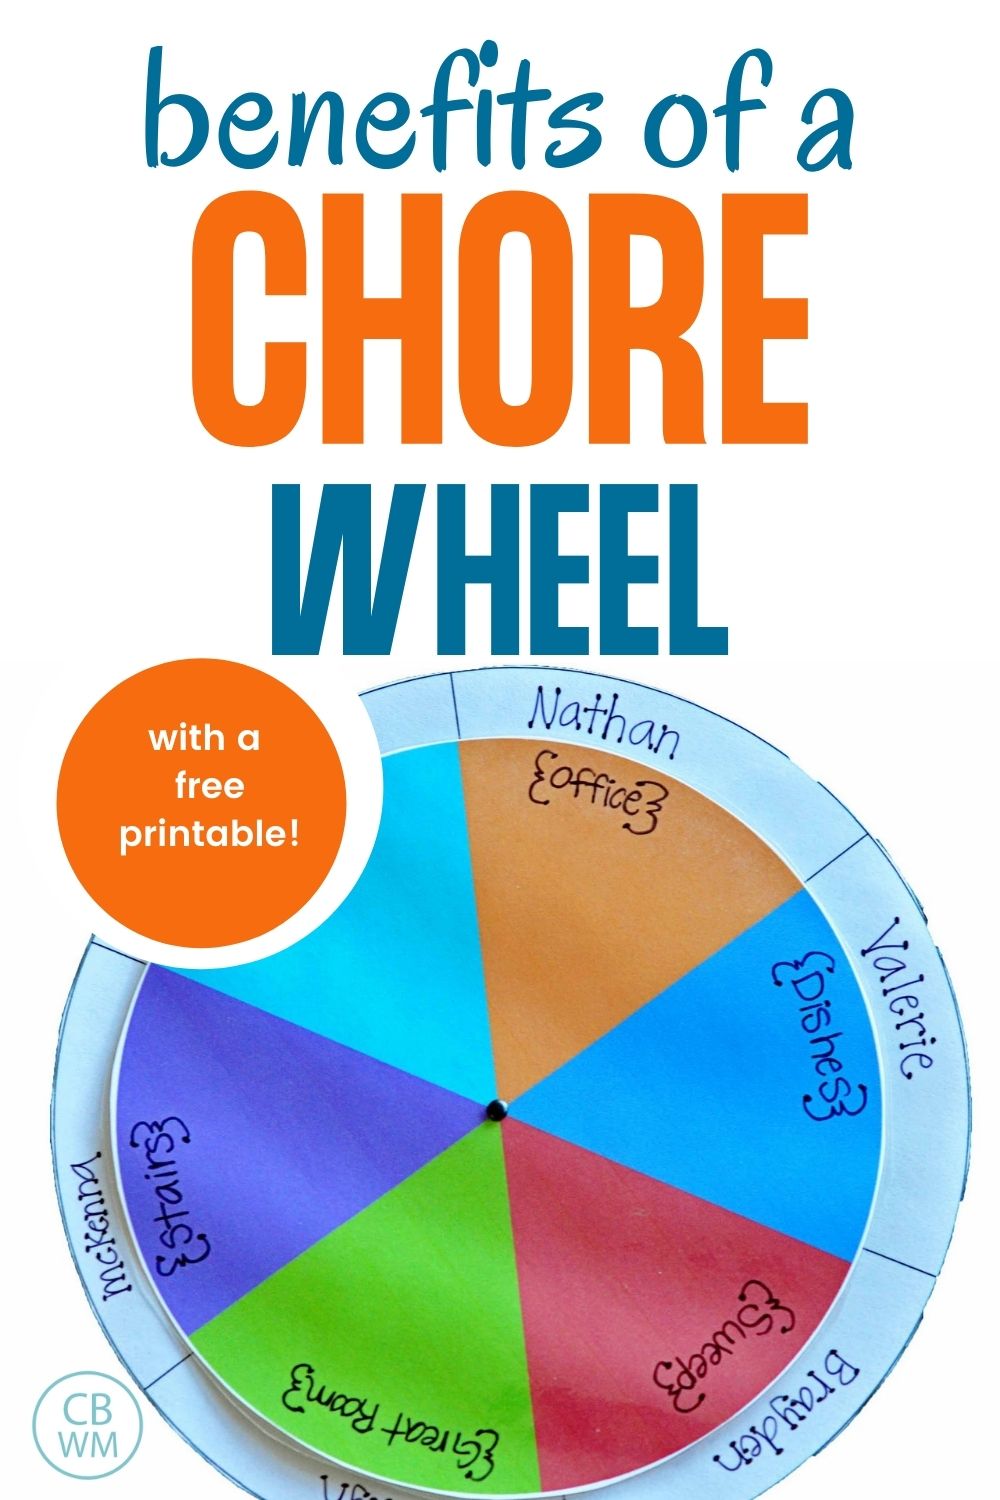 Benefits of a chore wheel